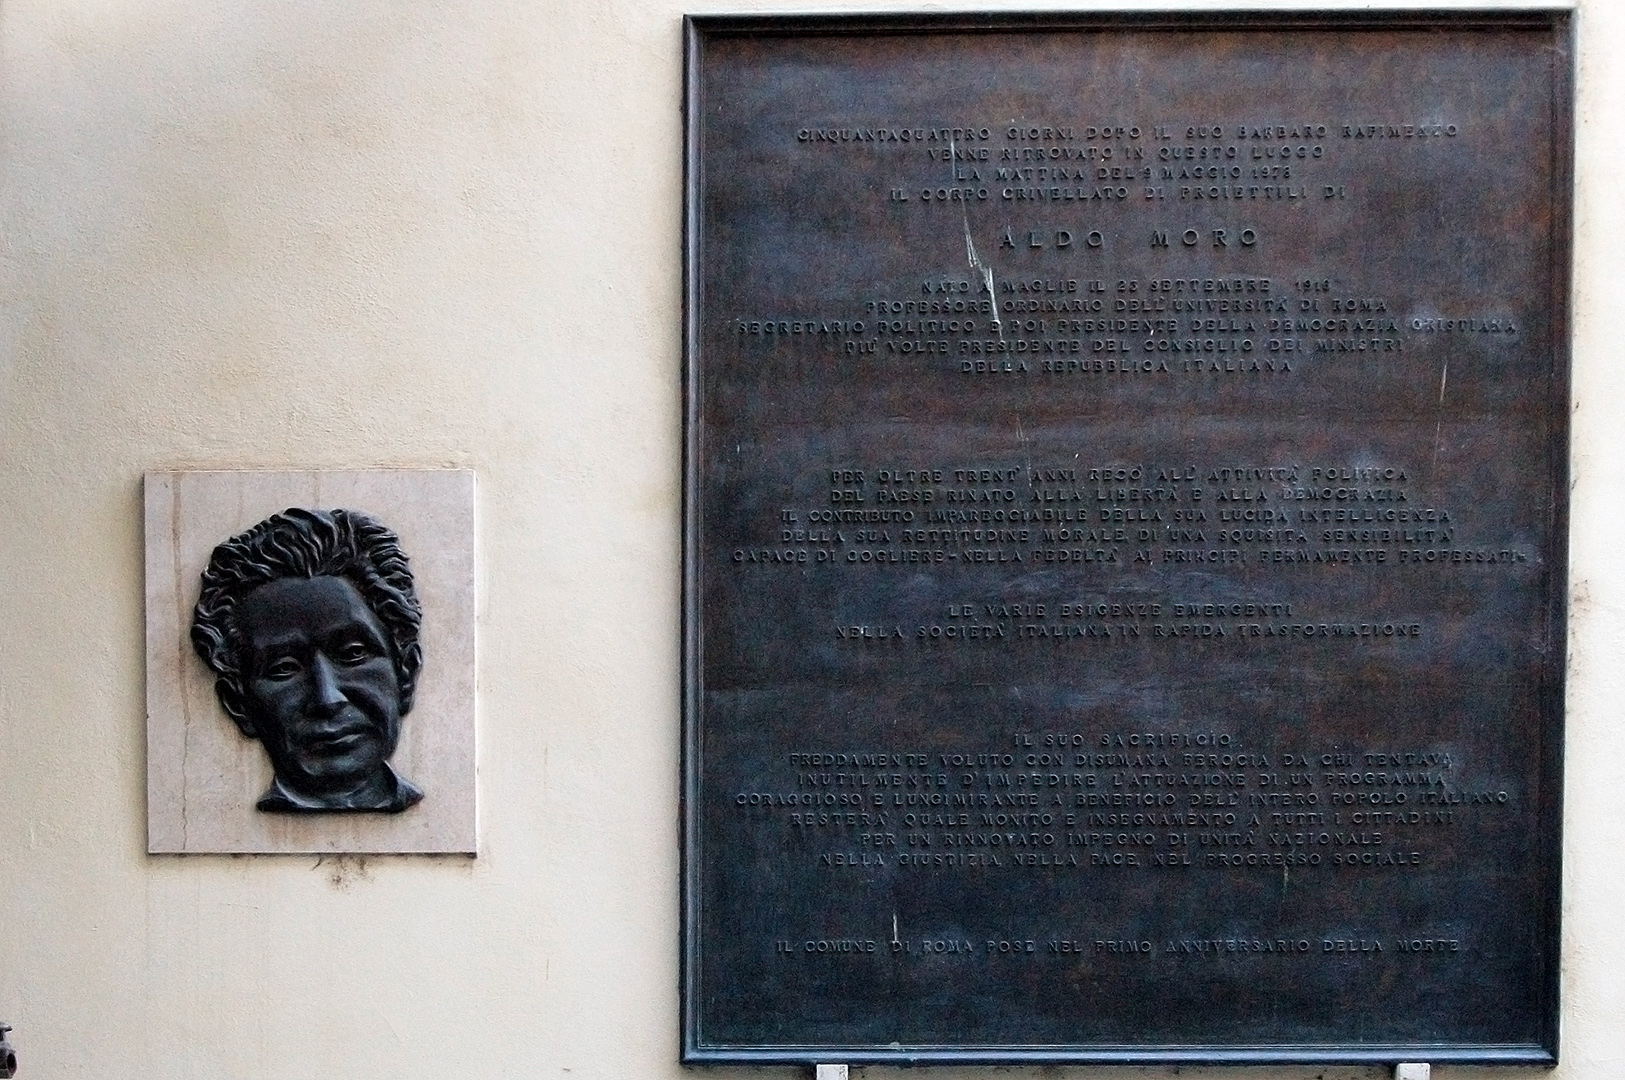 Herinneringsmonument voor Aldo Moro, Rome; Memorial to Aldo Moro, Rome, Italy